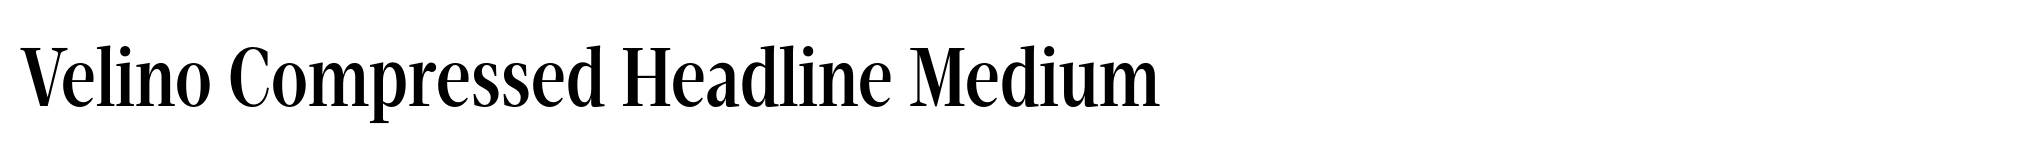 Velino Compressed Headline Medium image